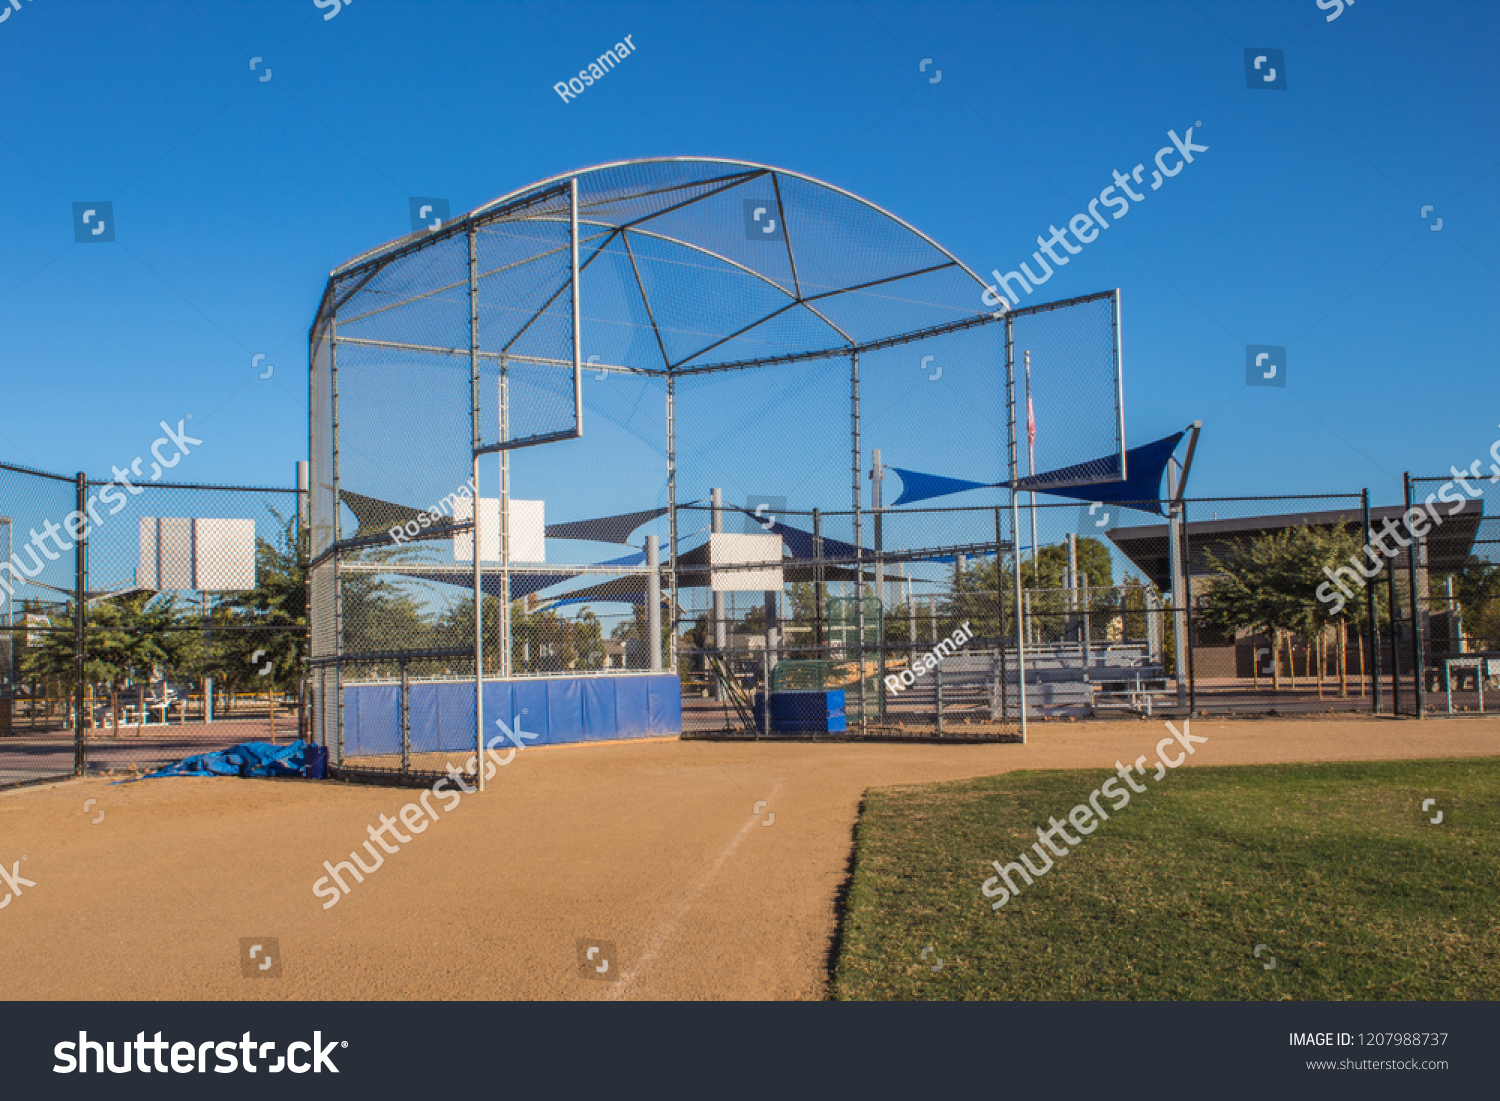 A baseball field batting cage #1207988737